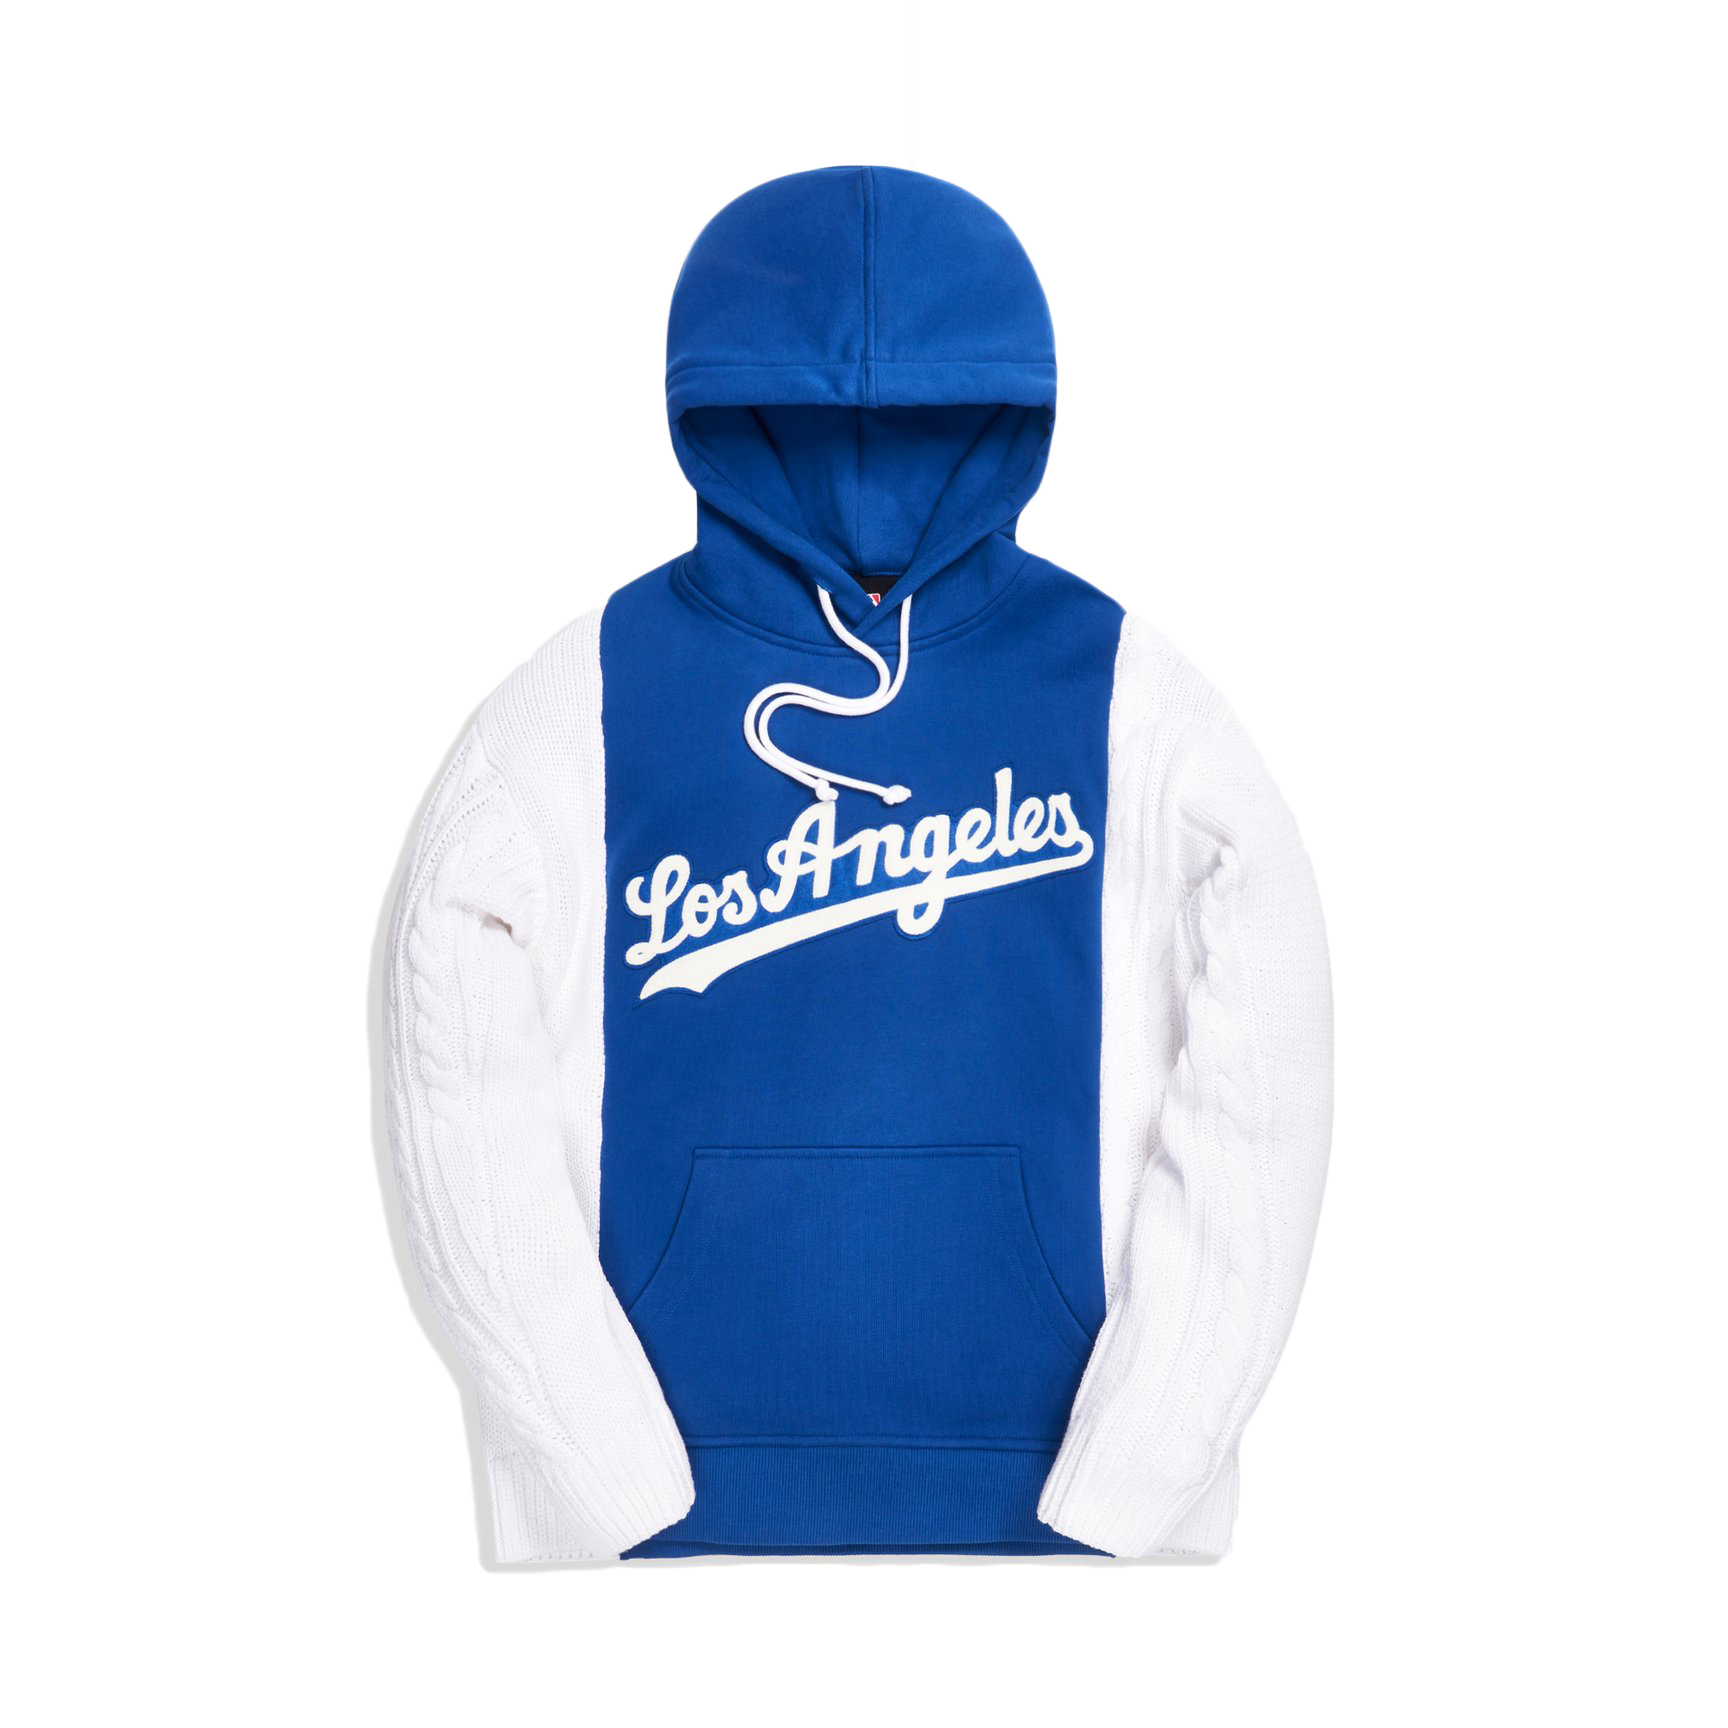 Kith For Major League Baseball Los Angeles Dodgers Combo Hoodie Royal Blue